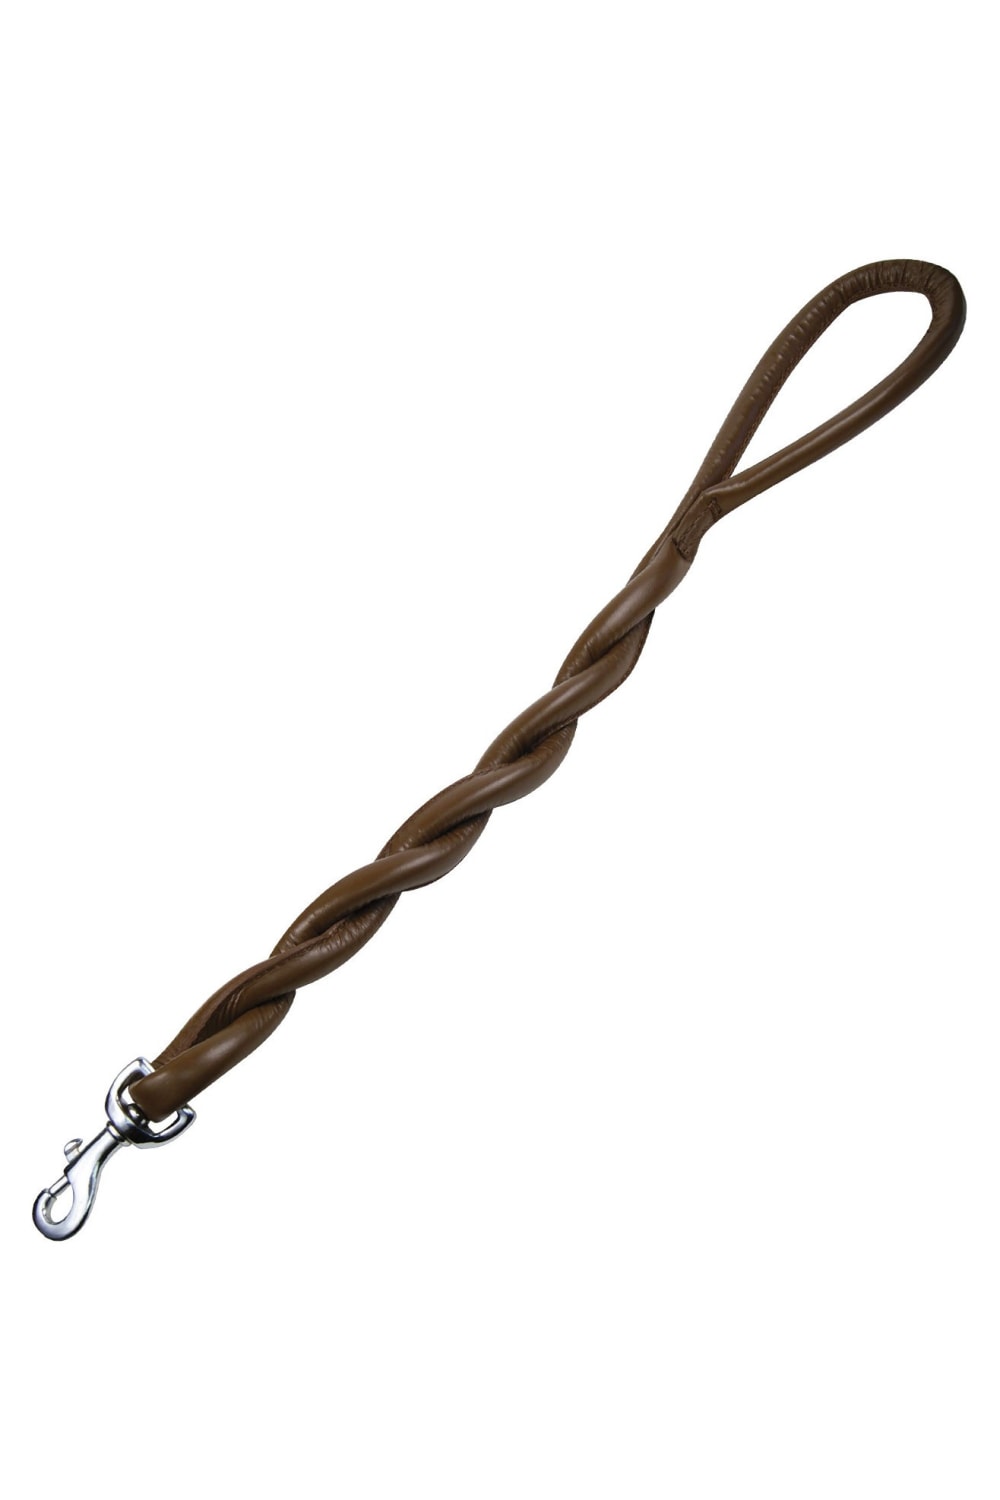 Gloria Twisted Leather Dog Leash (Brown) (60cm)